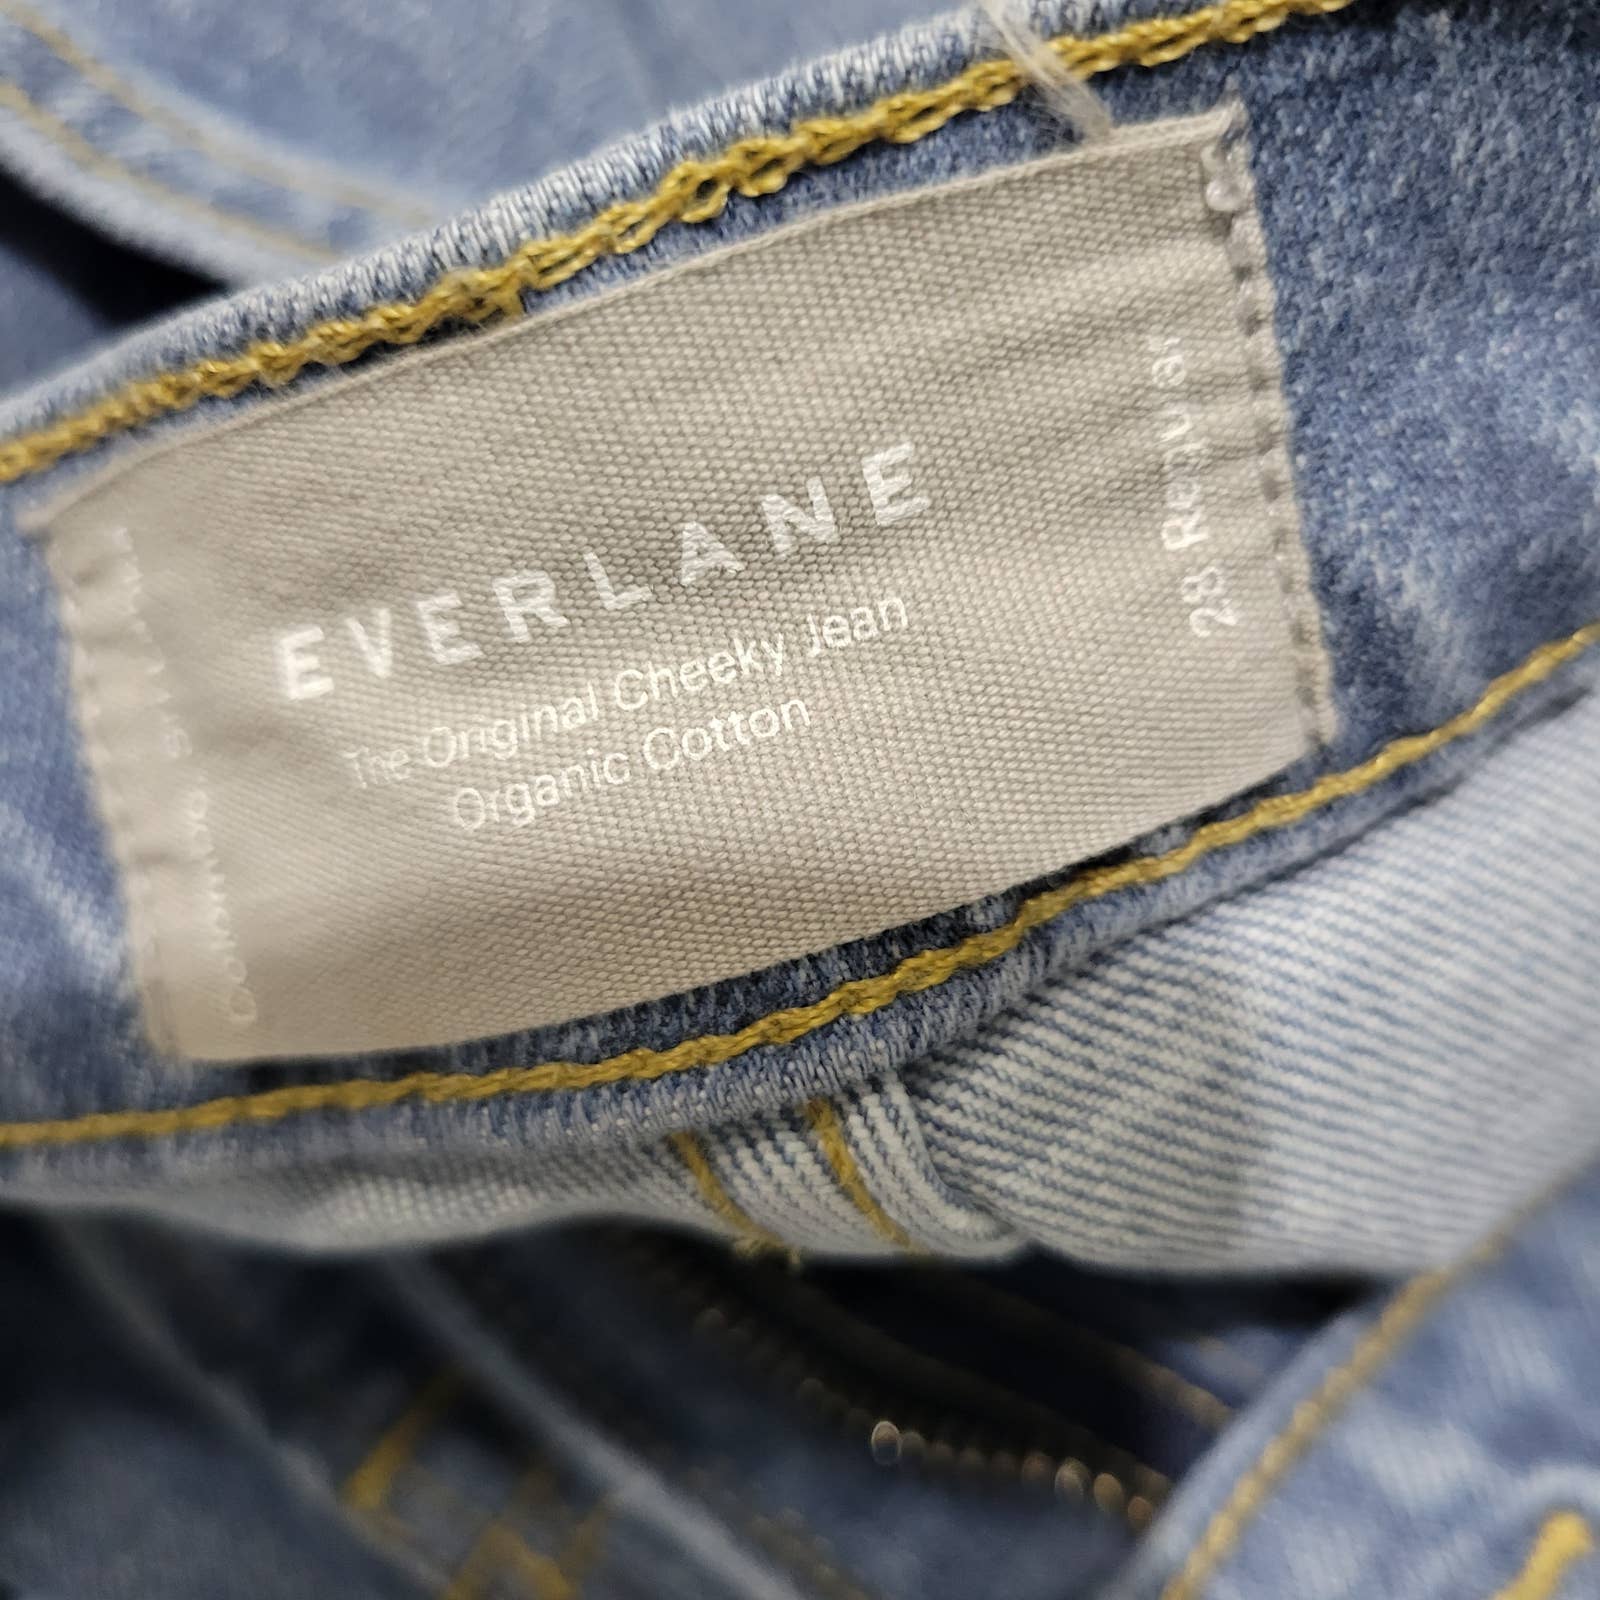 Everlane Original Cheeky Jean Blue Light Wash Stonewash Denim High Rise Straight Leg Size 28